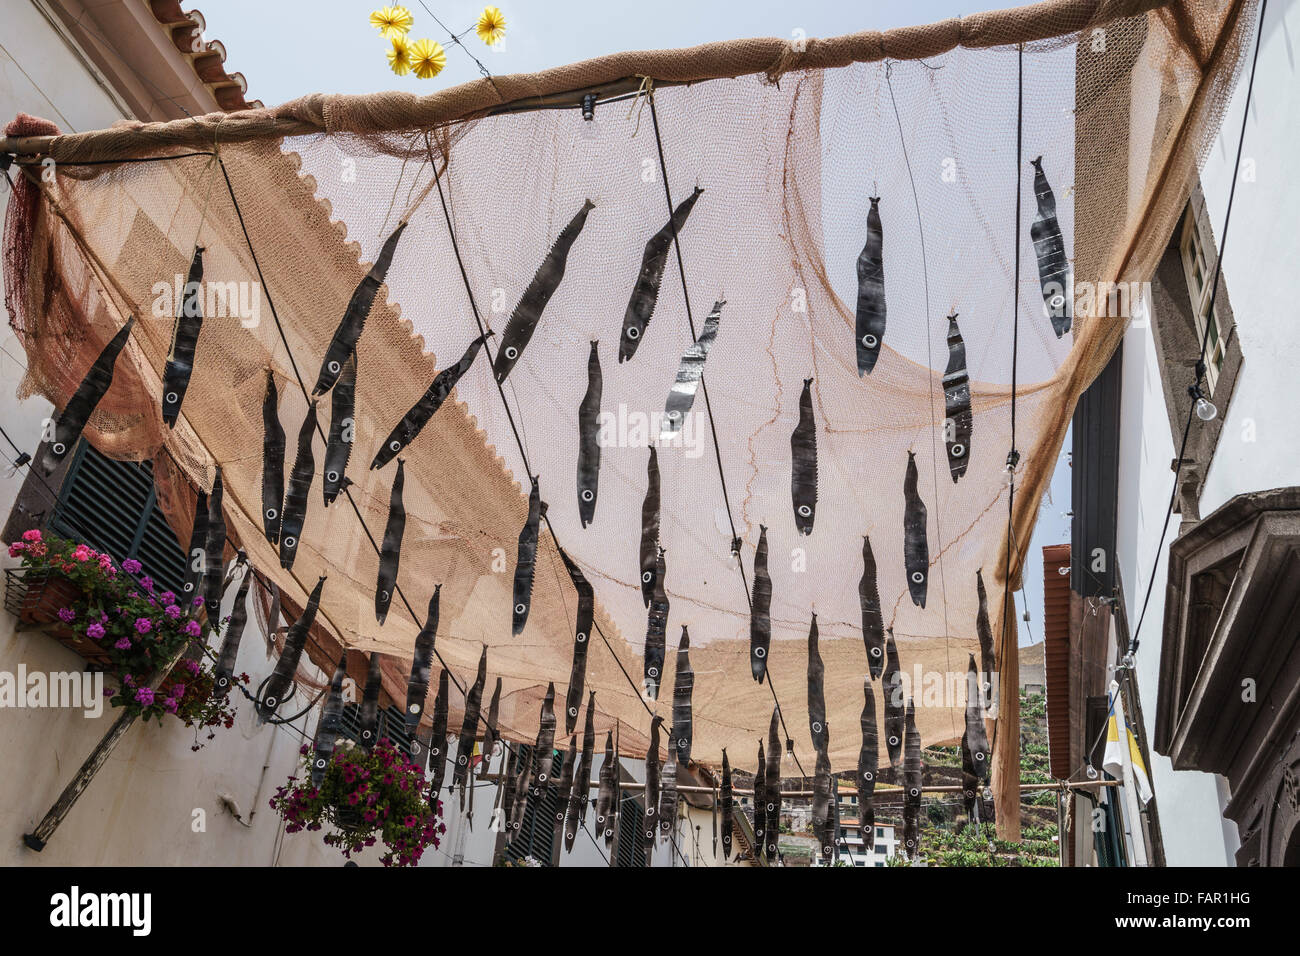 Madeira - Camara de Lobos fishing port, festival of St Peter. Town decorated with paper espada fish. Stock Photo